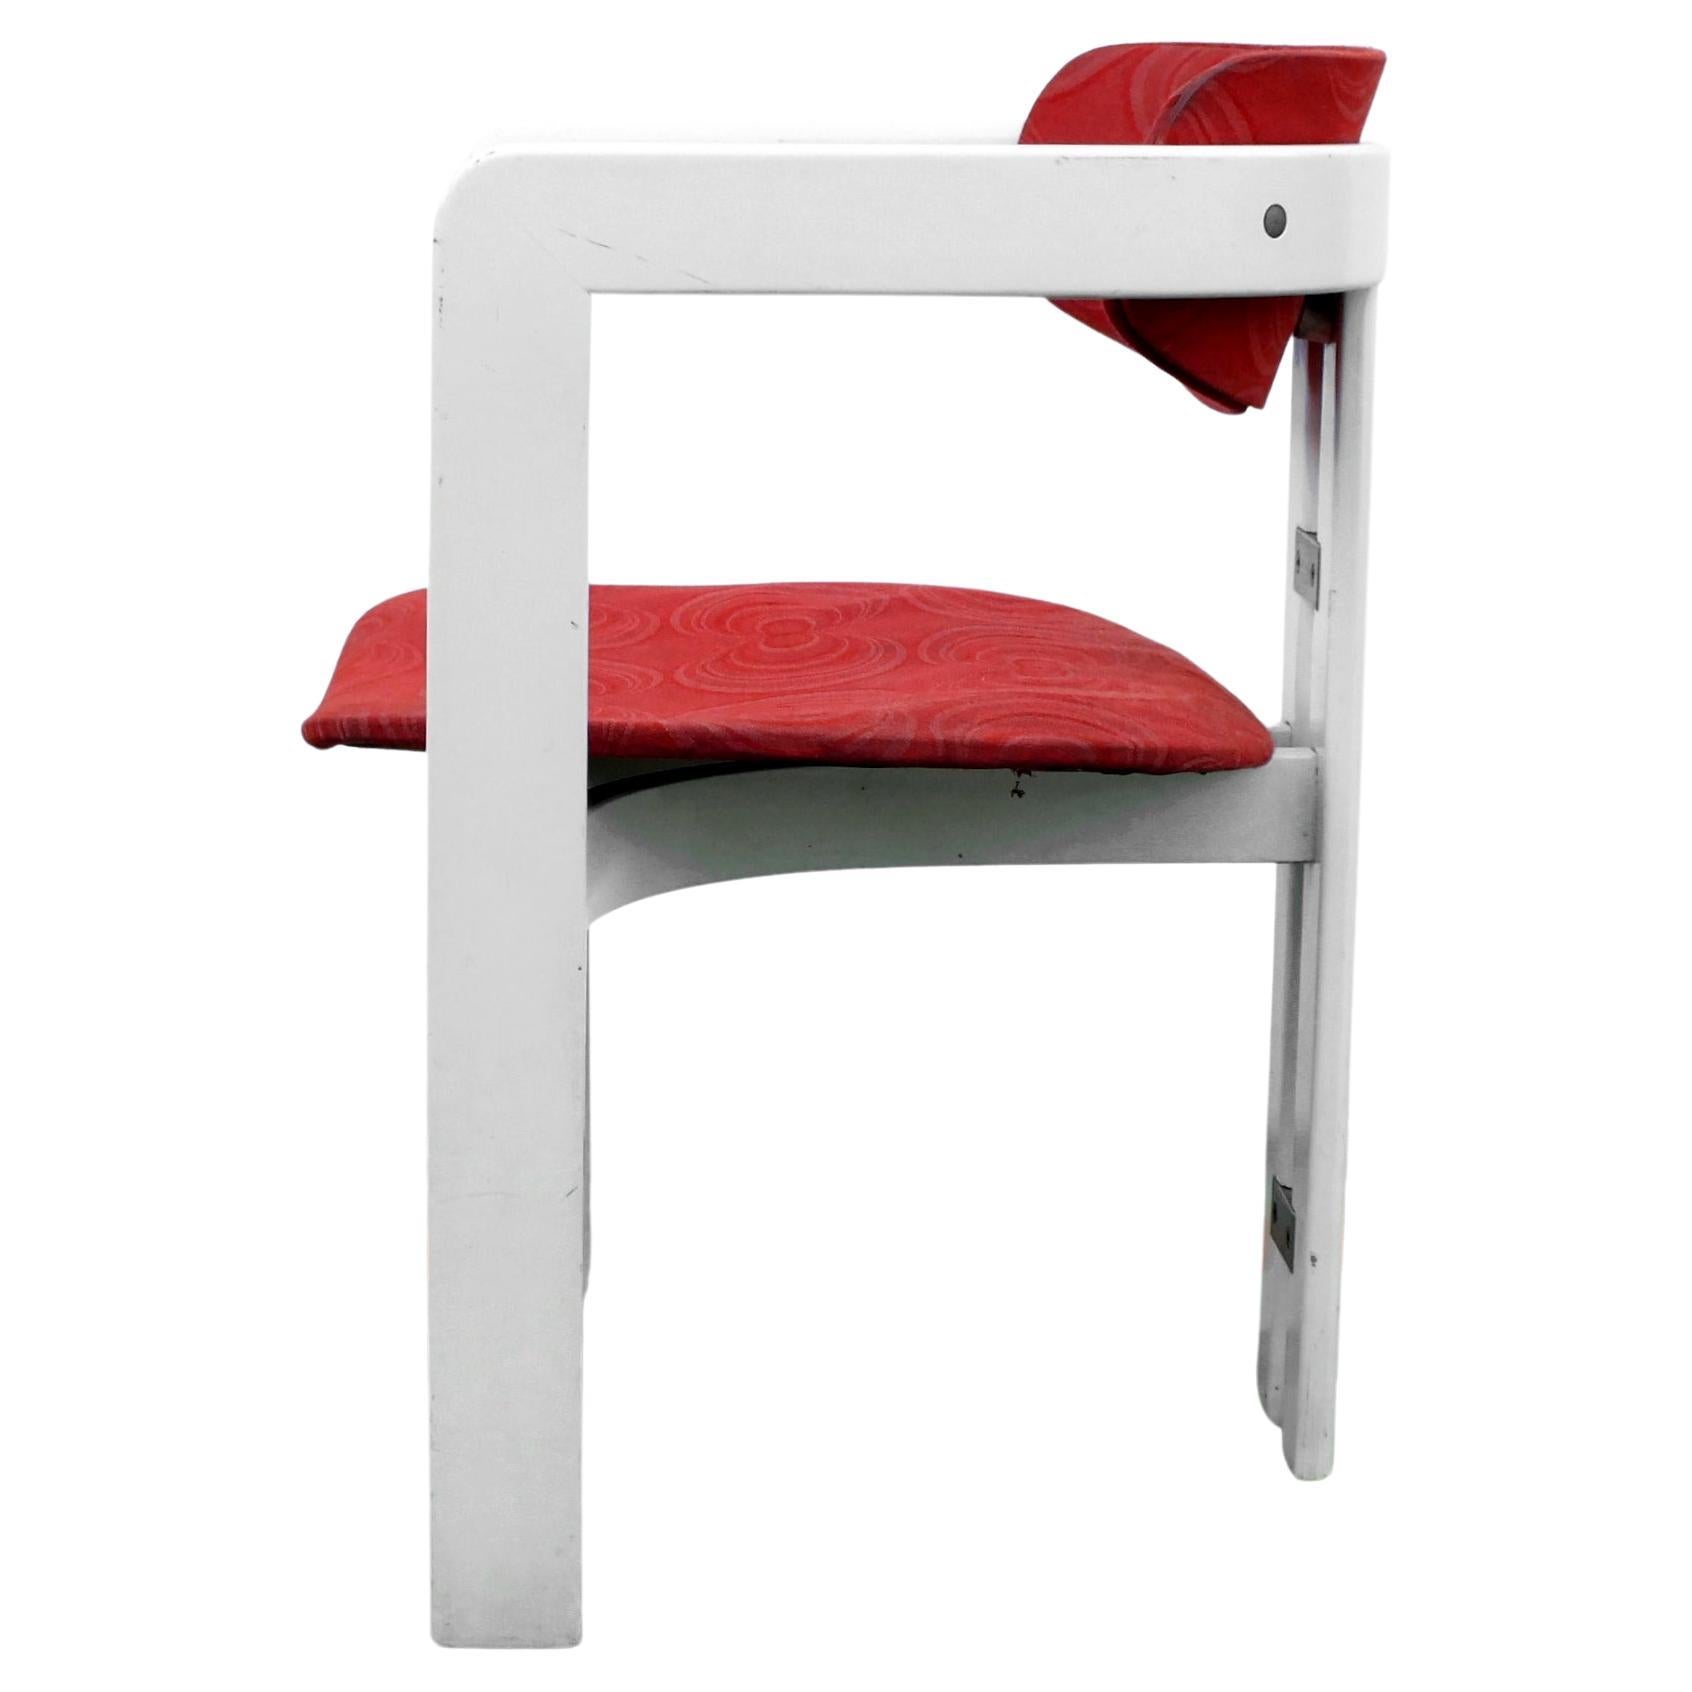 1965 Augusto Savini Design 1 Pamplona Chair, Pozzi Italy For Sale